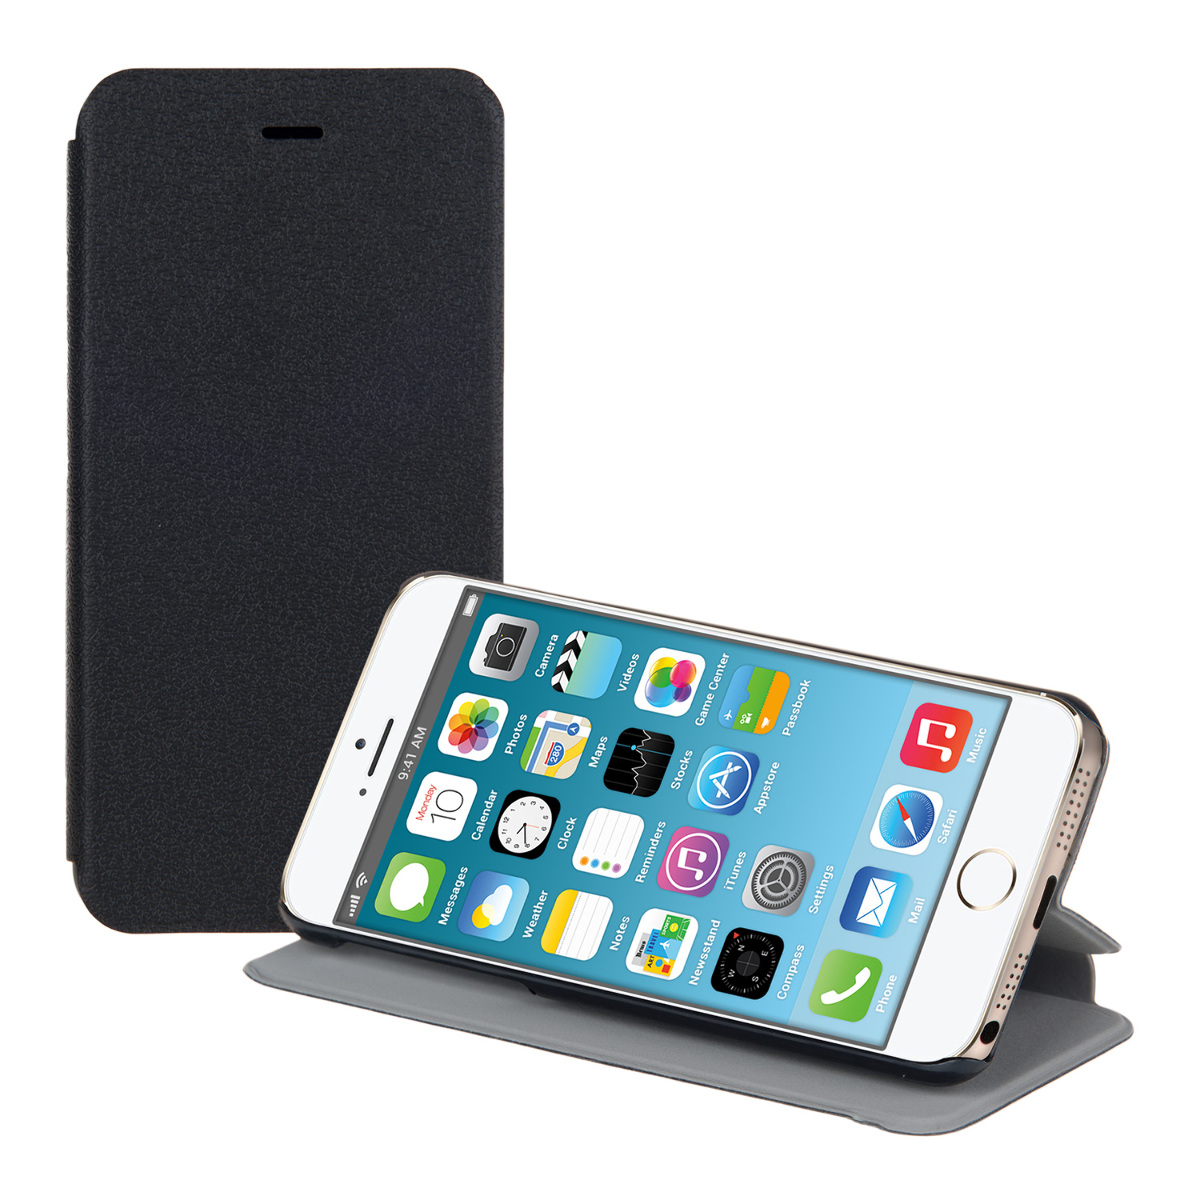 cover apple iphone 6 plus schwarz in kreuzlingen kaufen bei ricardo.ch